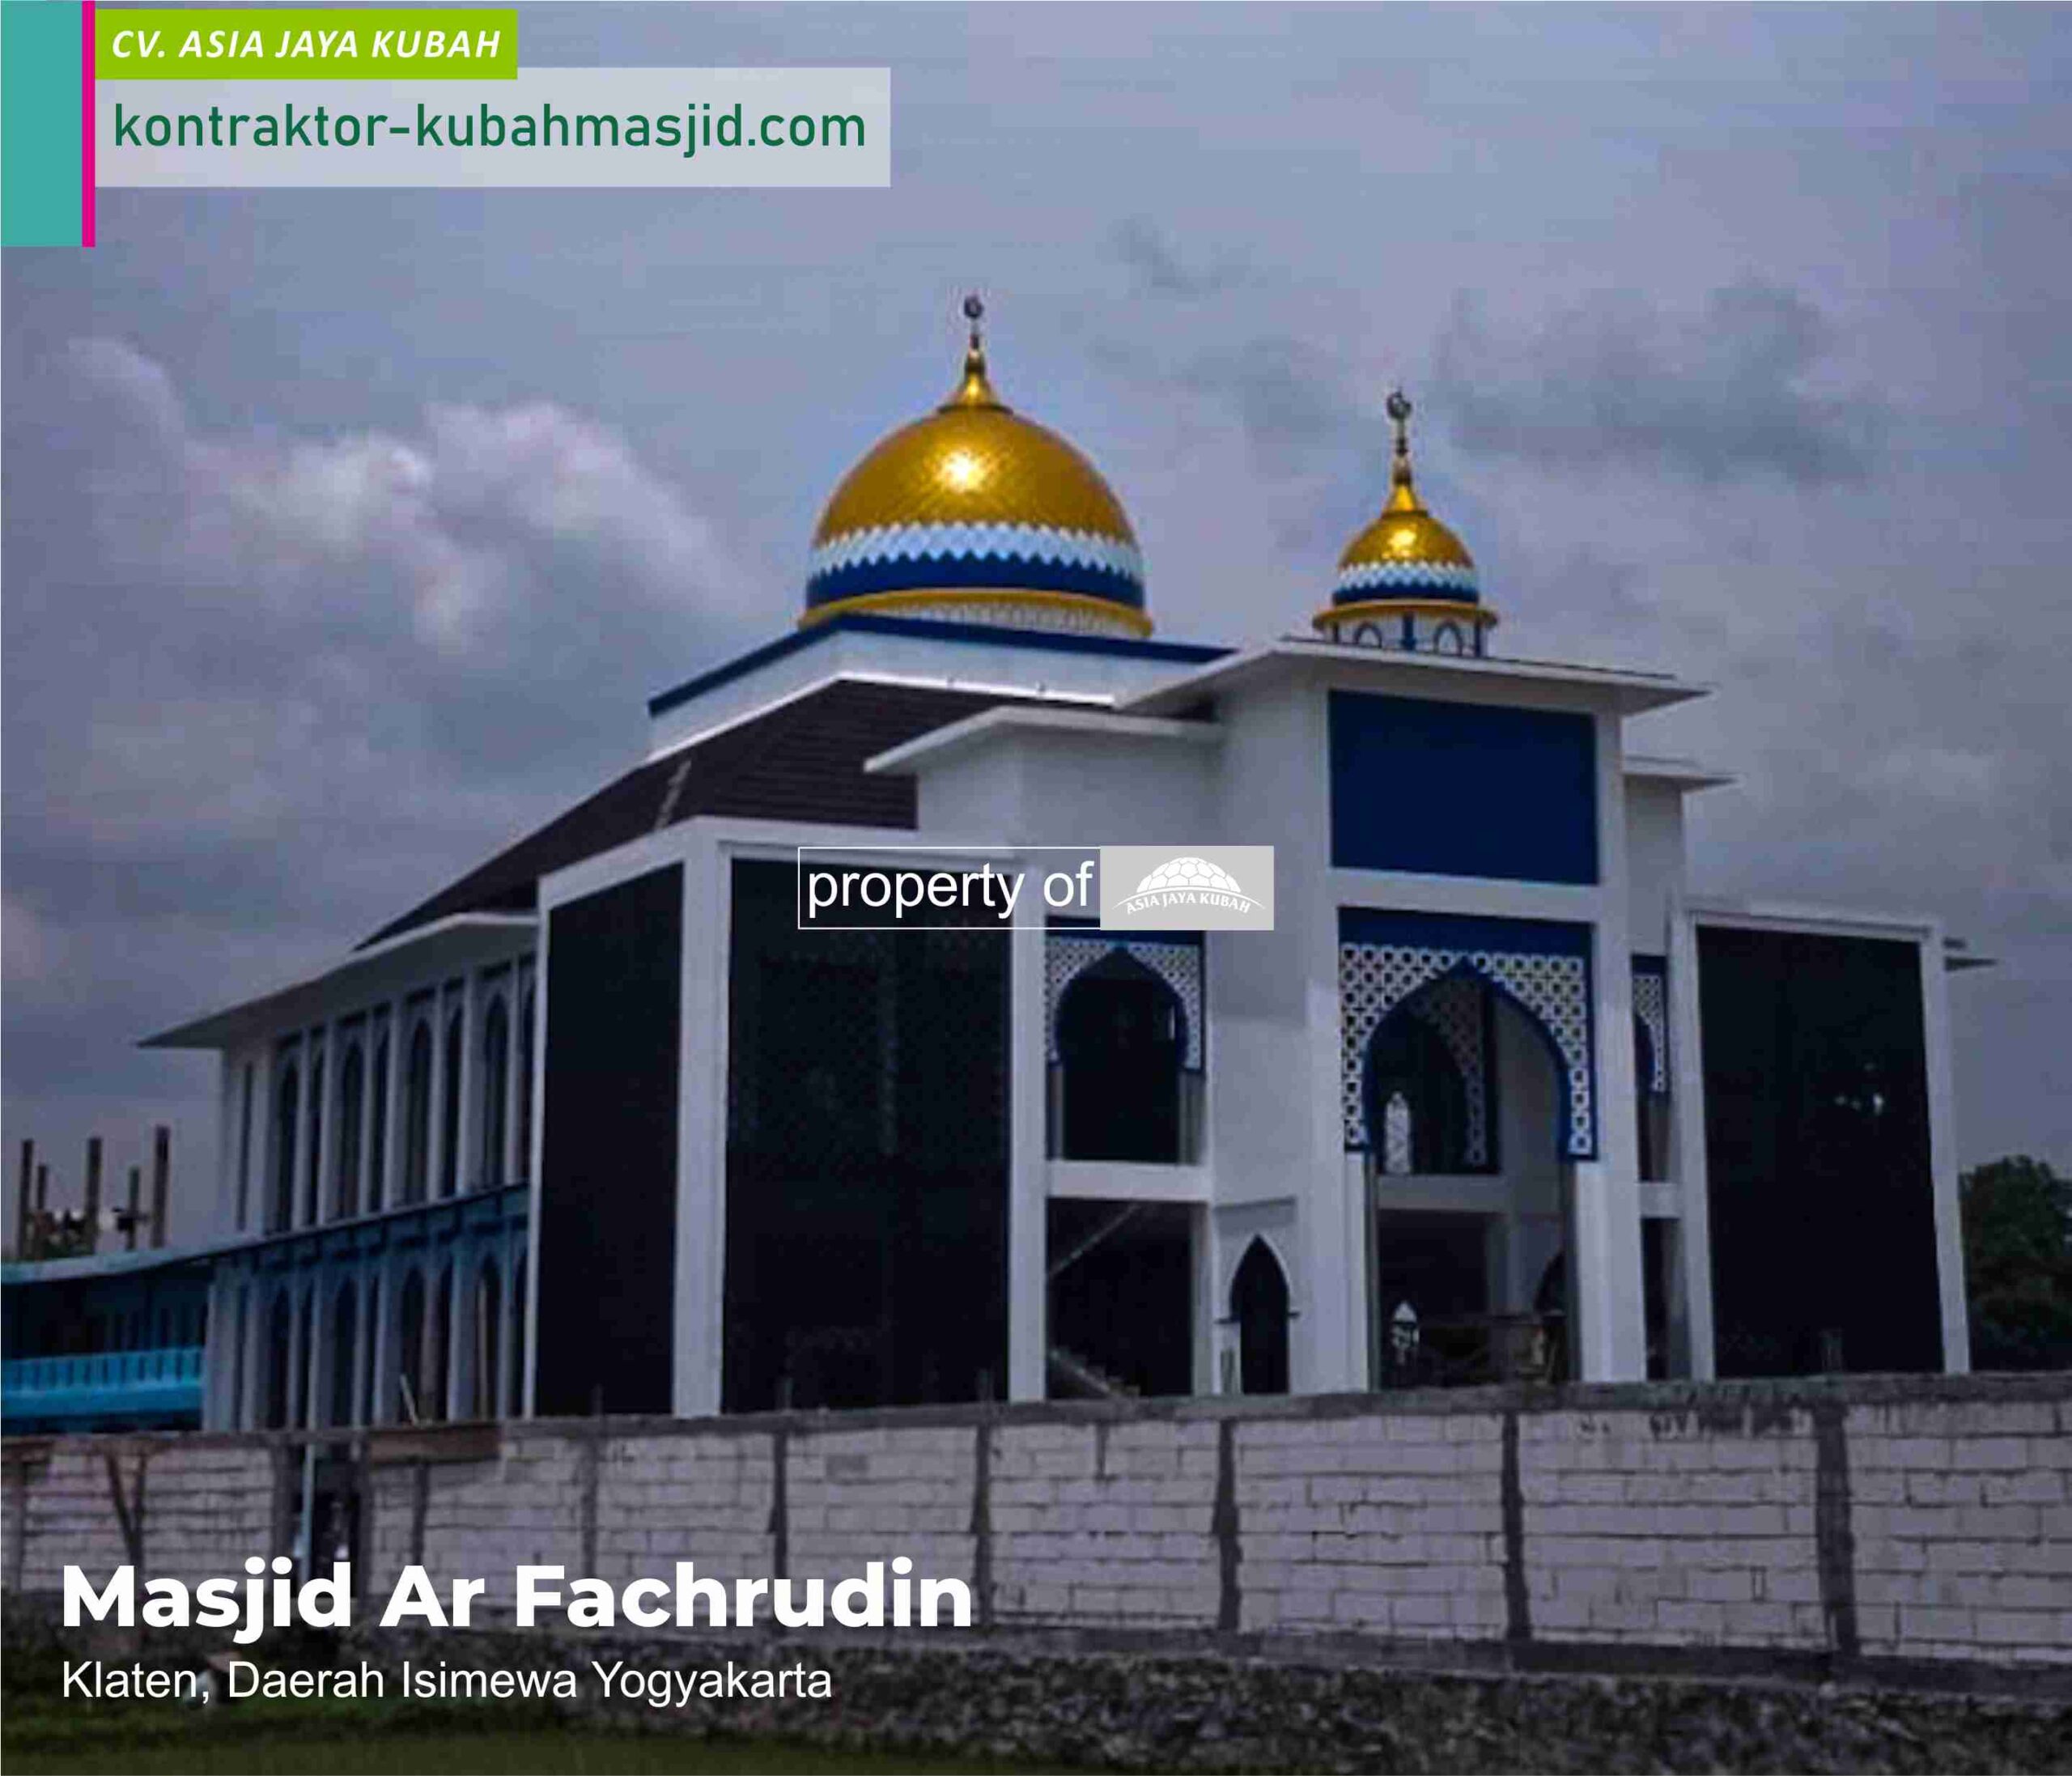 Harga Kubah Masjid Galvalum per meter di Hulu Sungai Tengah